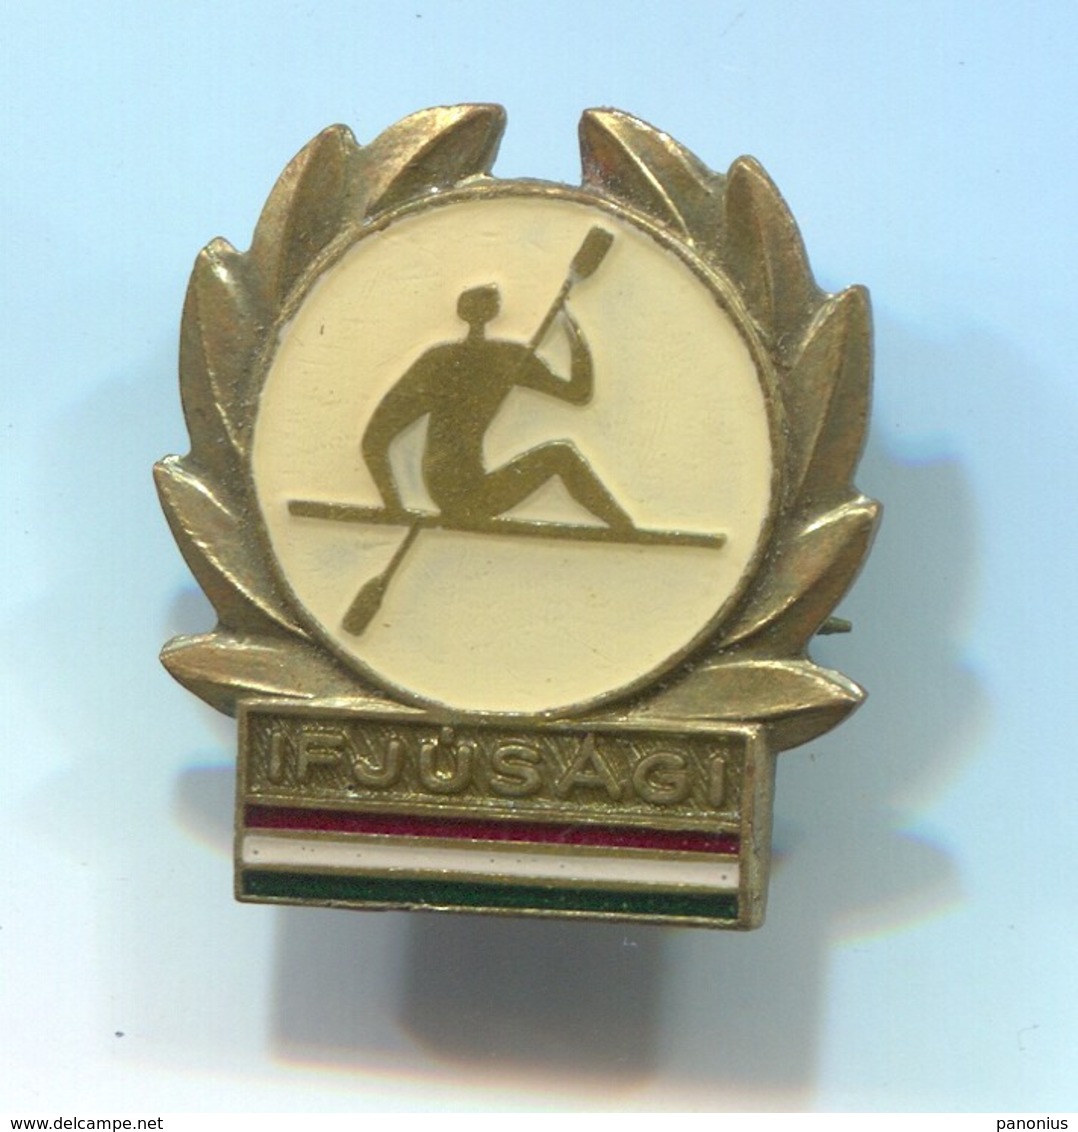 Rowing Canoe Kayak - Hungary Federation, Vintage Pin, Badge, Abzeichen - Rudersport